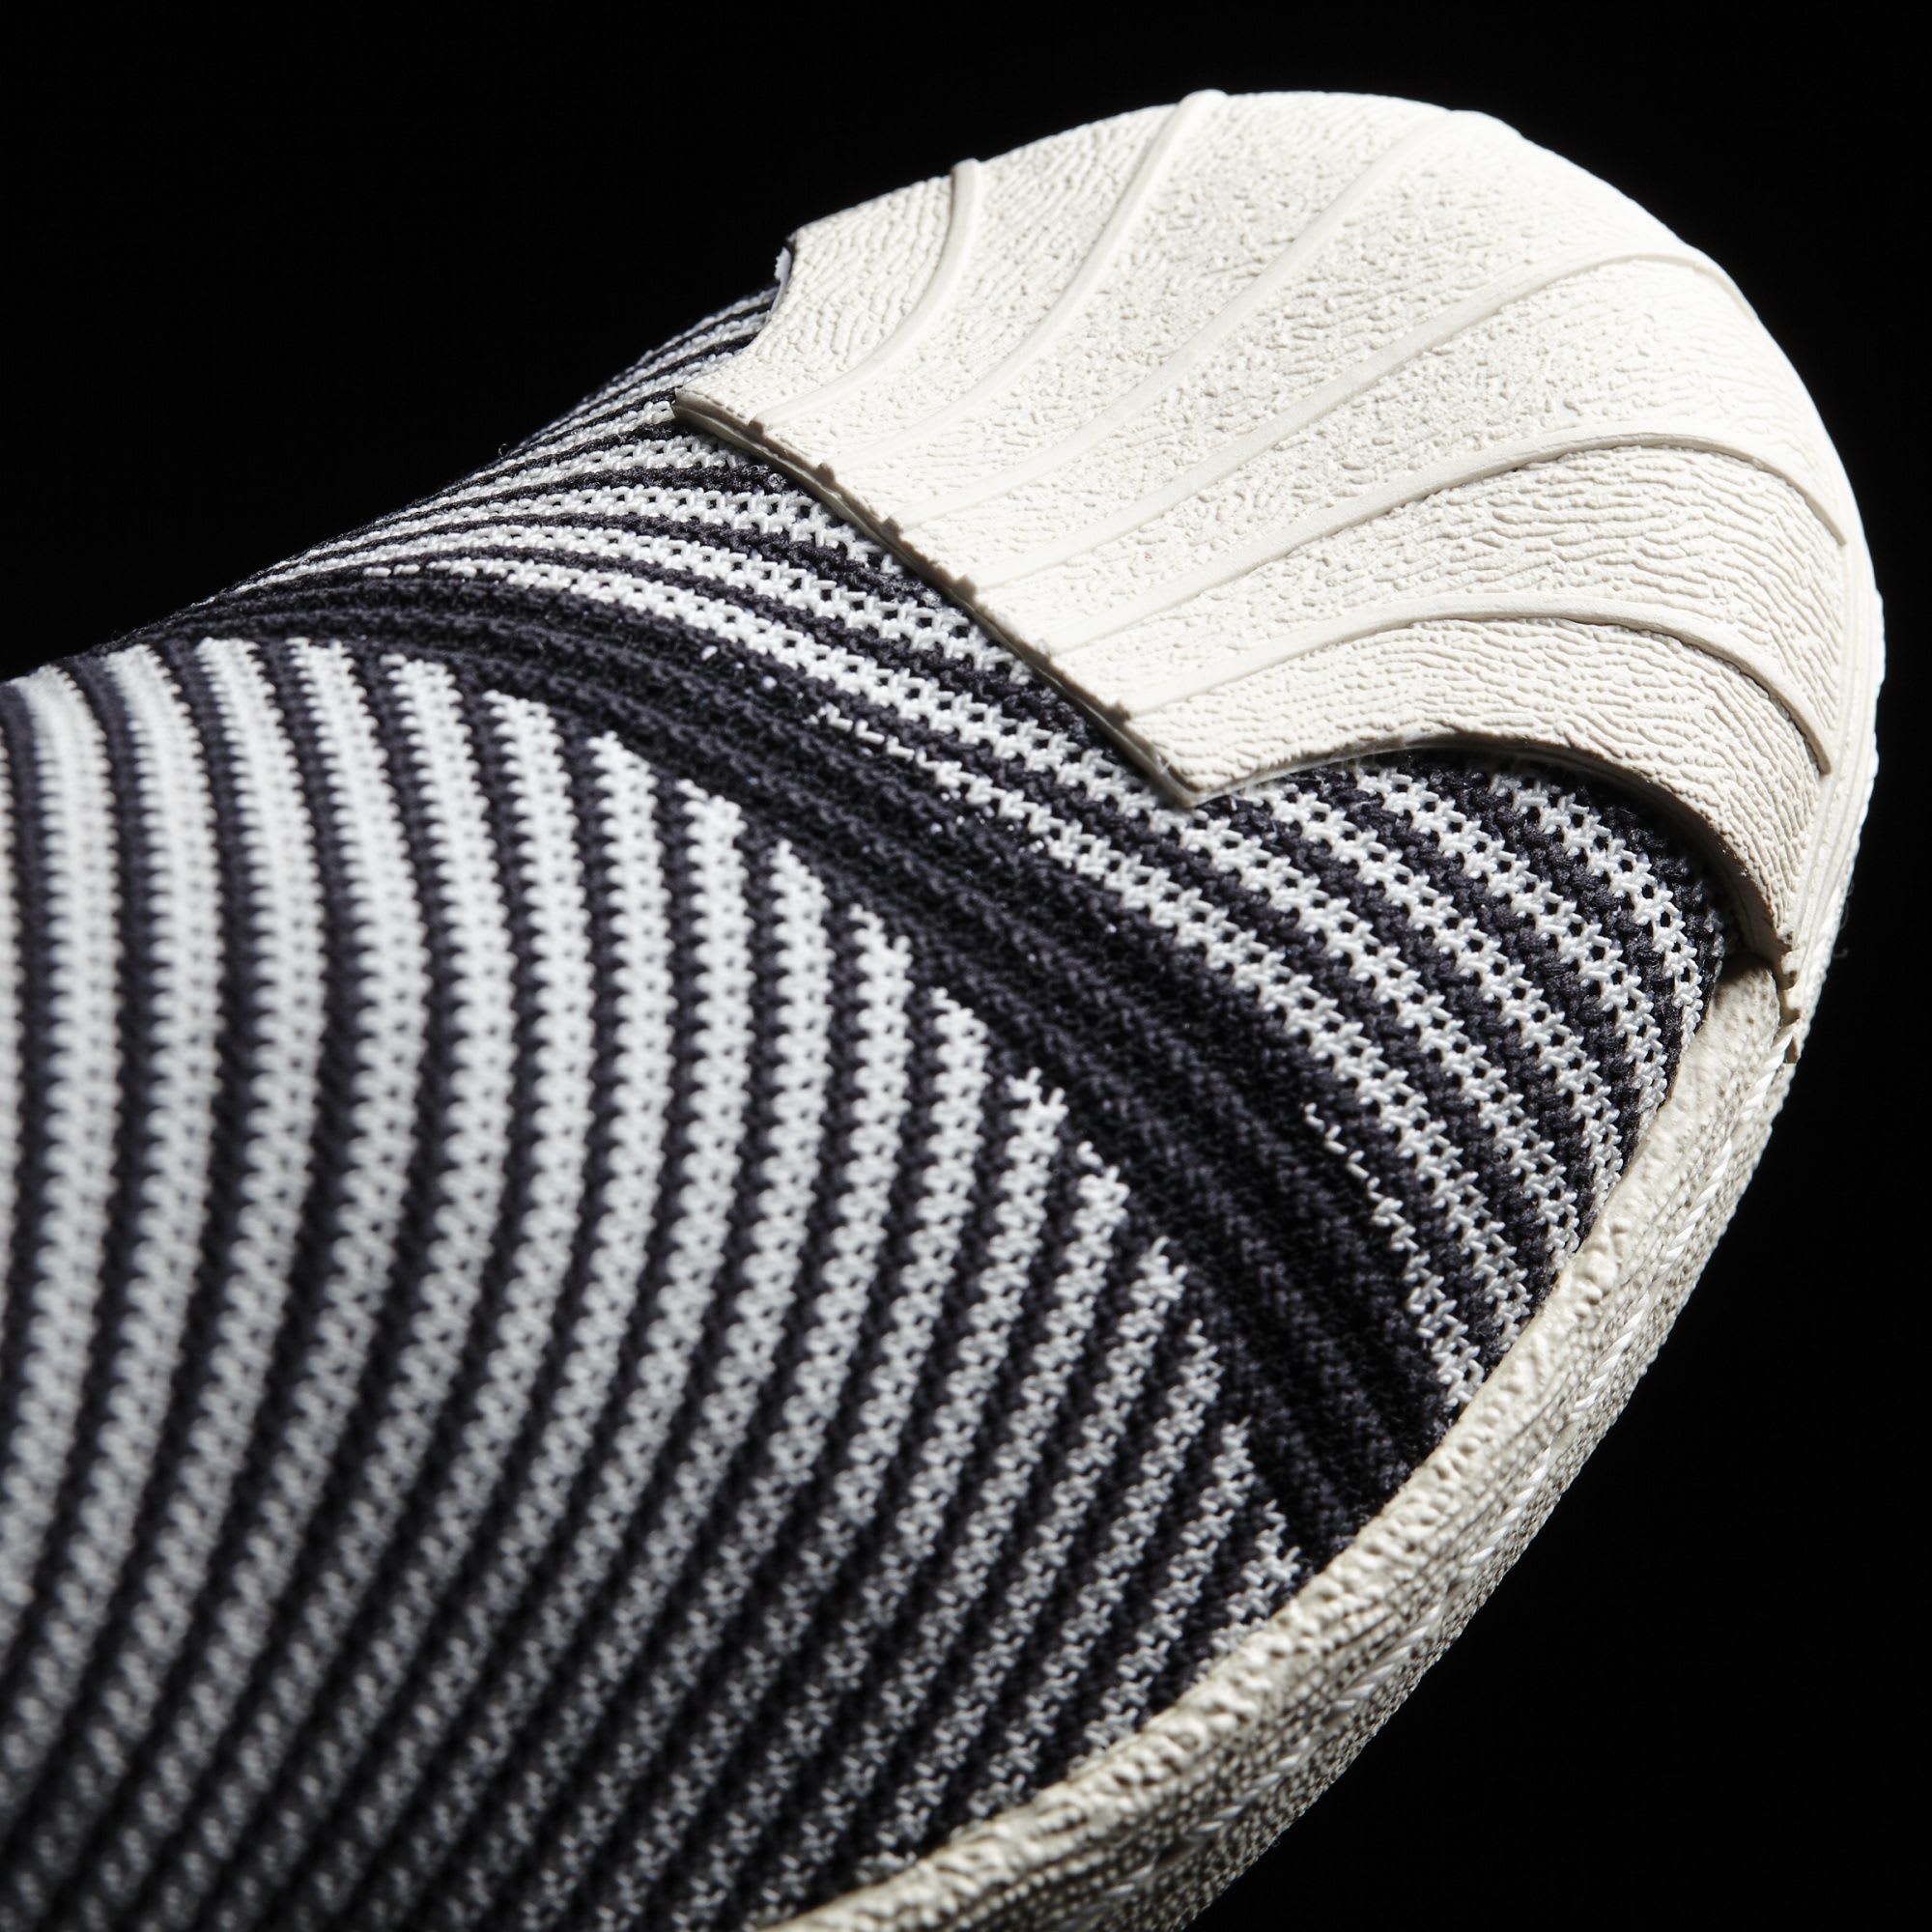 Adidas Superstar Primeknit Boot Toe